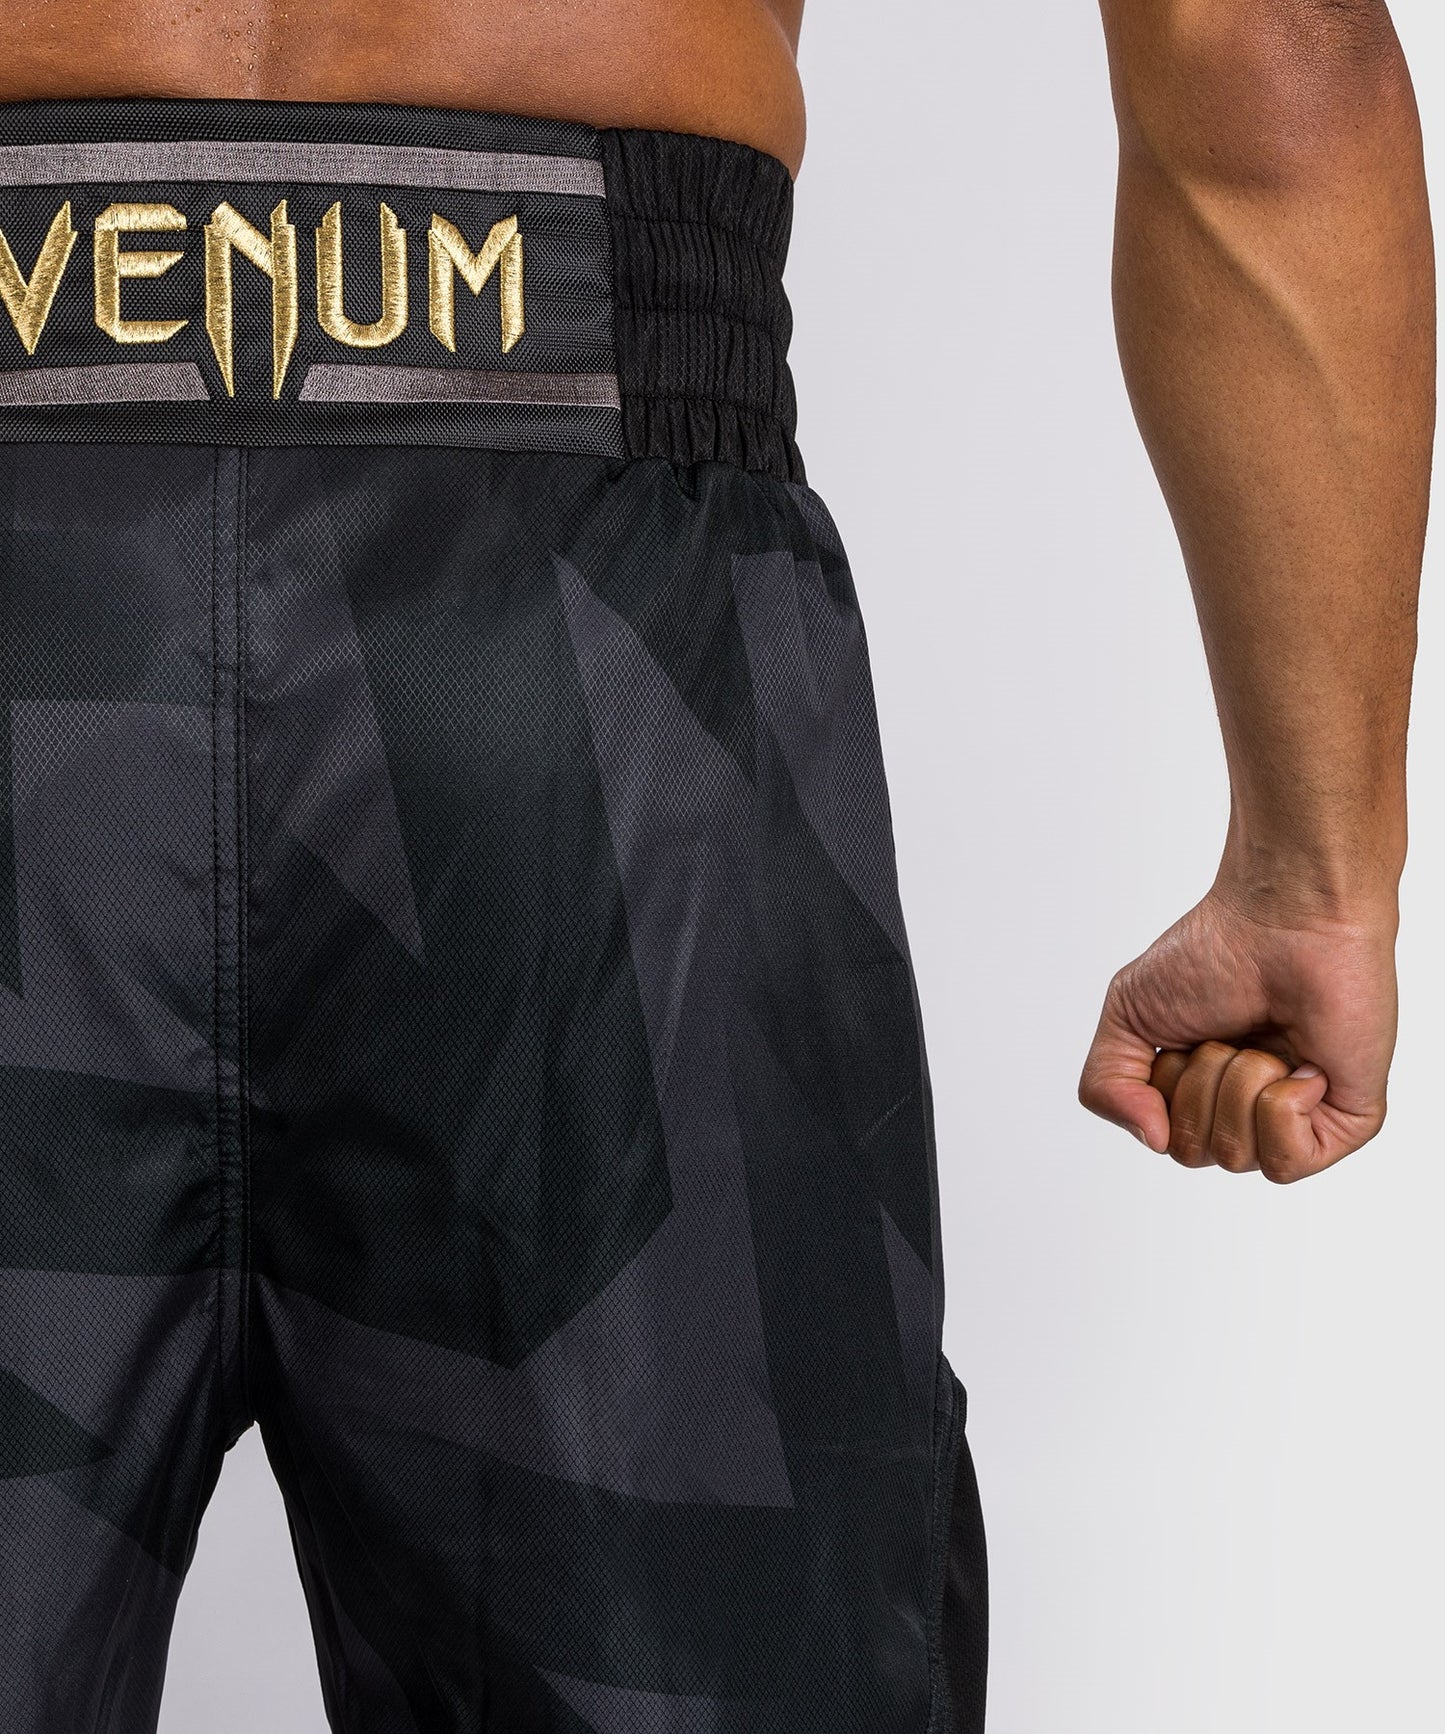 Shorts de Boxeo Venum Razor - Negro/Oro